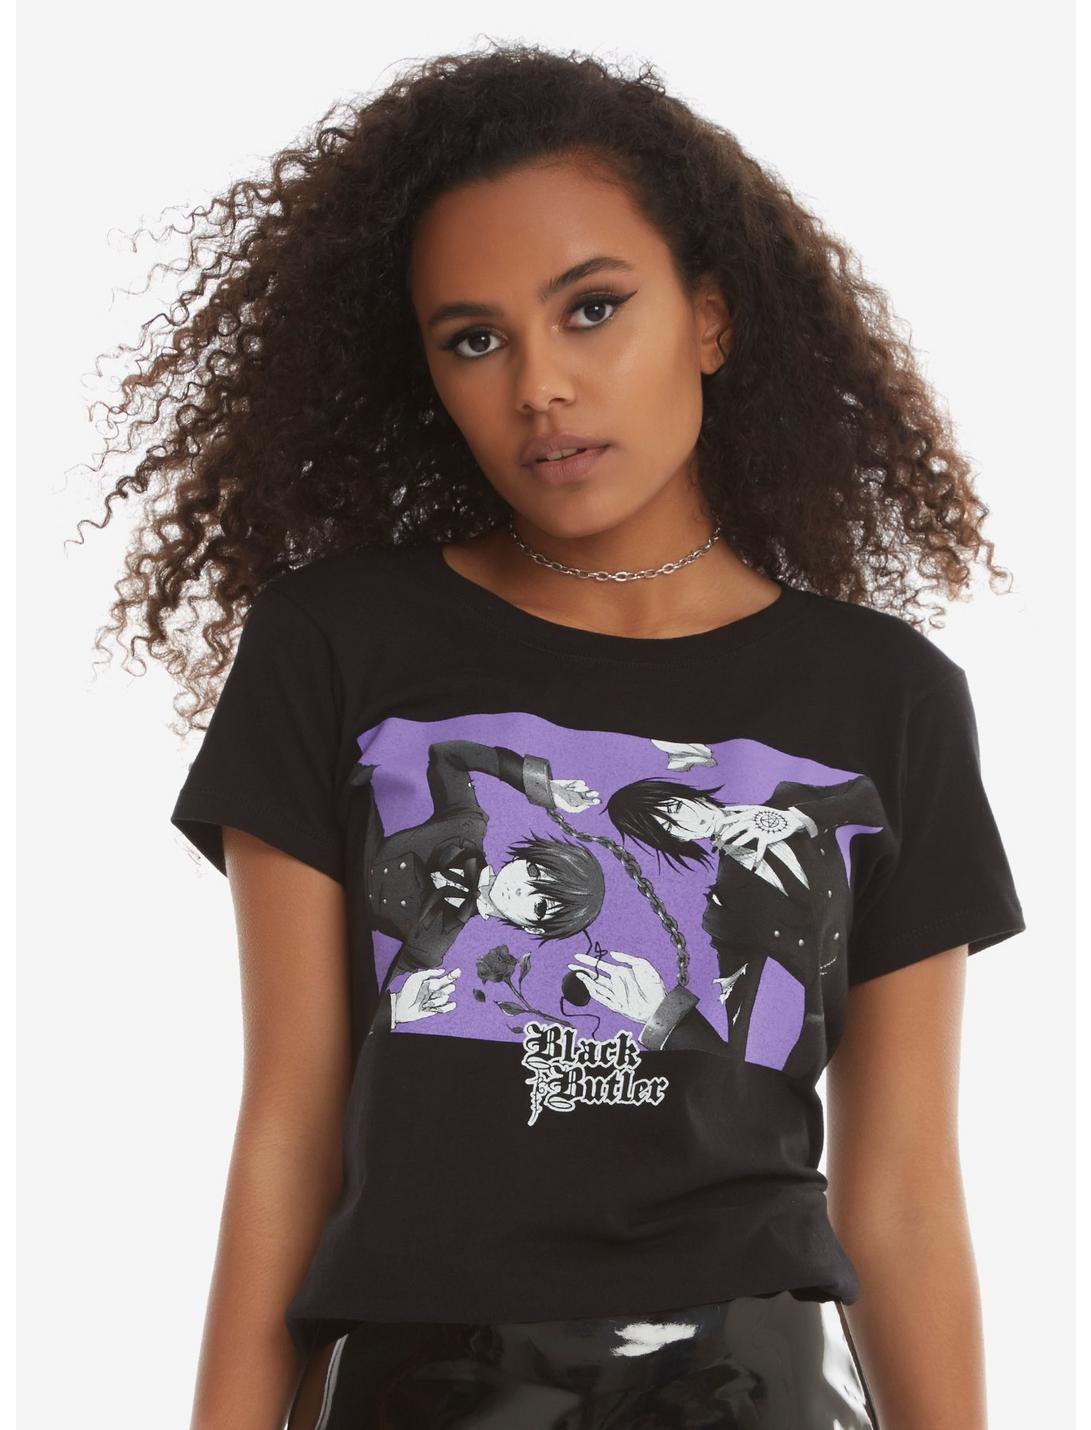 Black Butler Chains Girls T-Shirt | Hot Topic